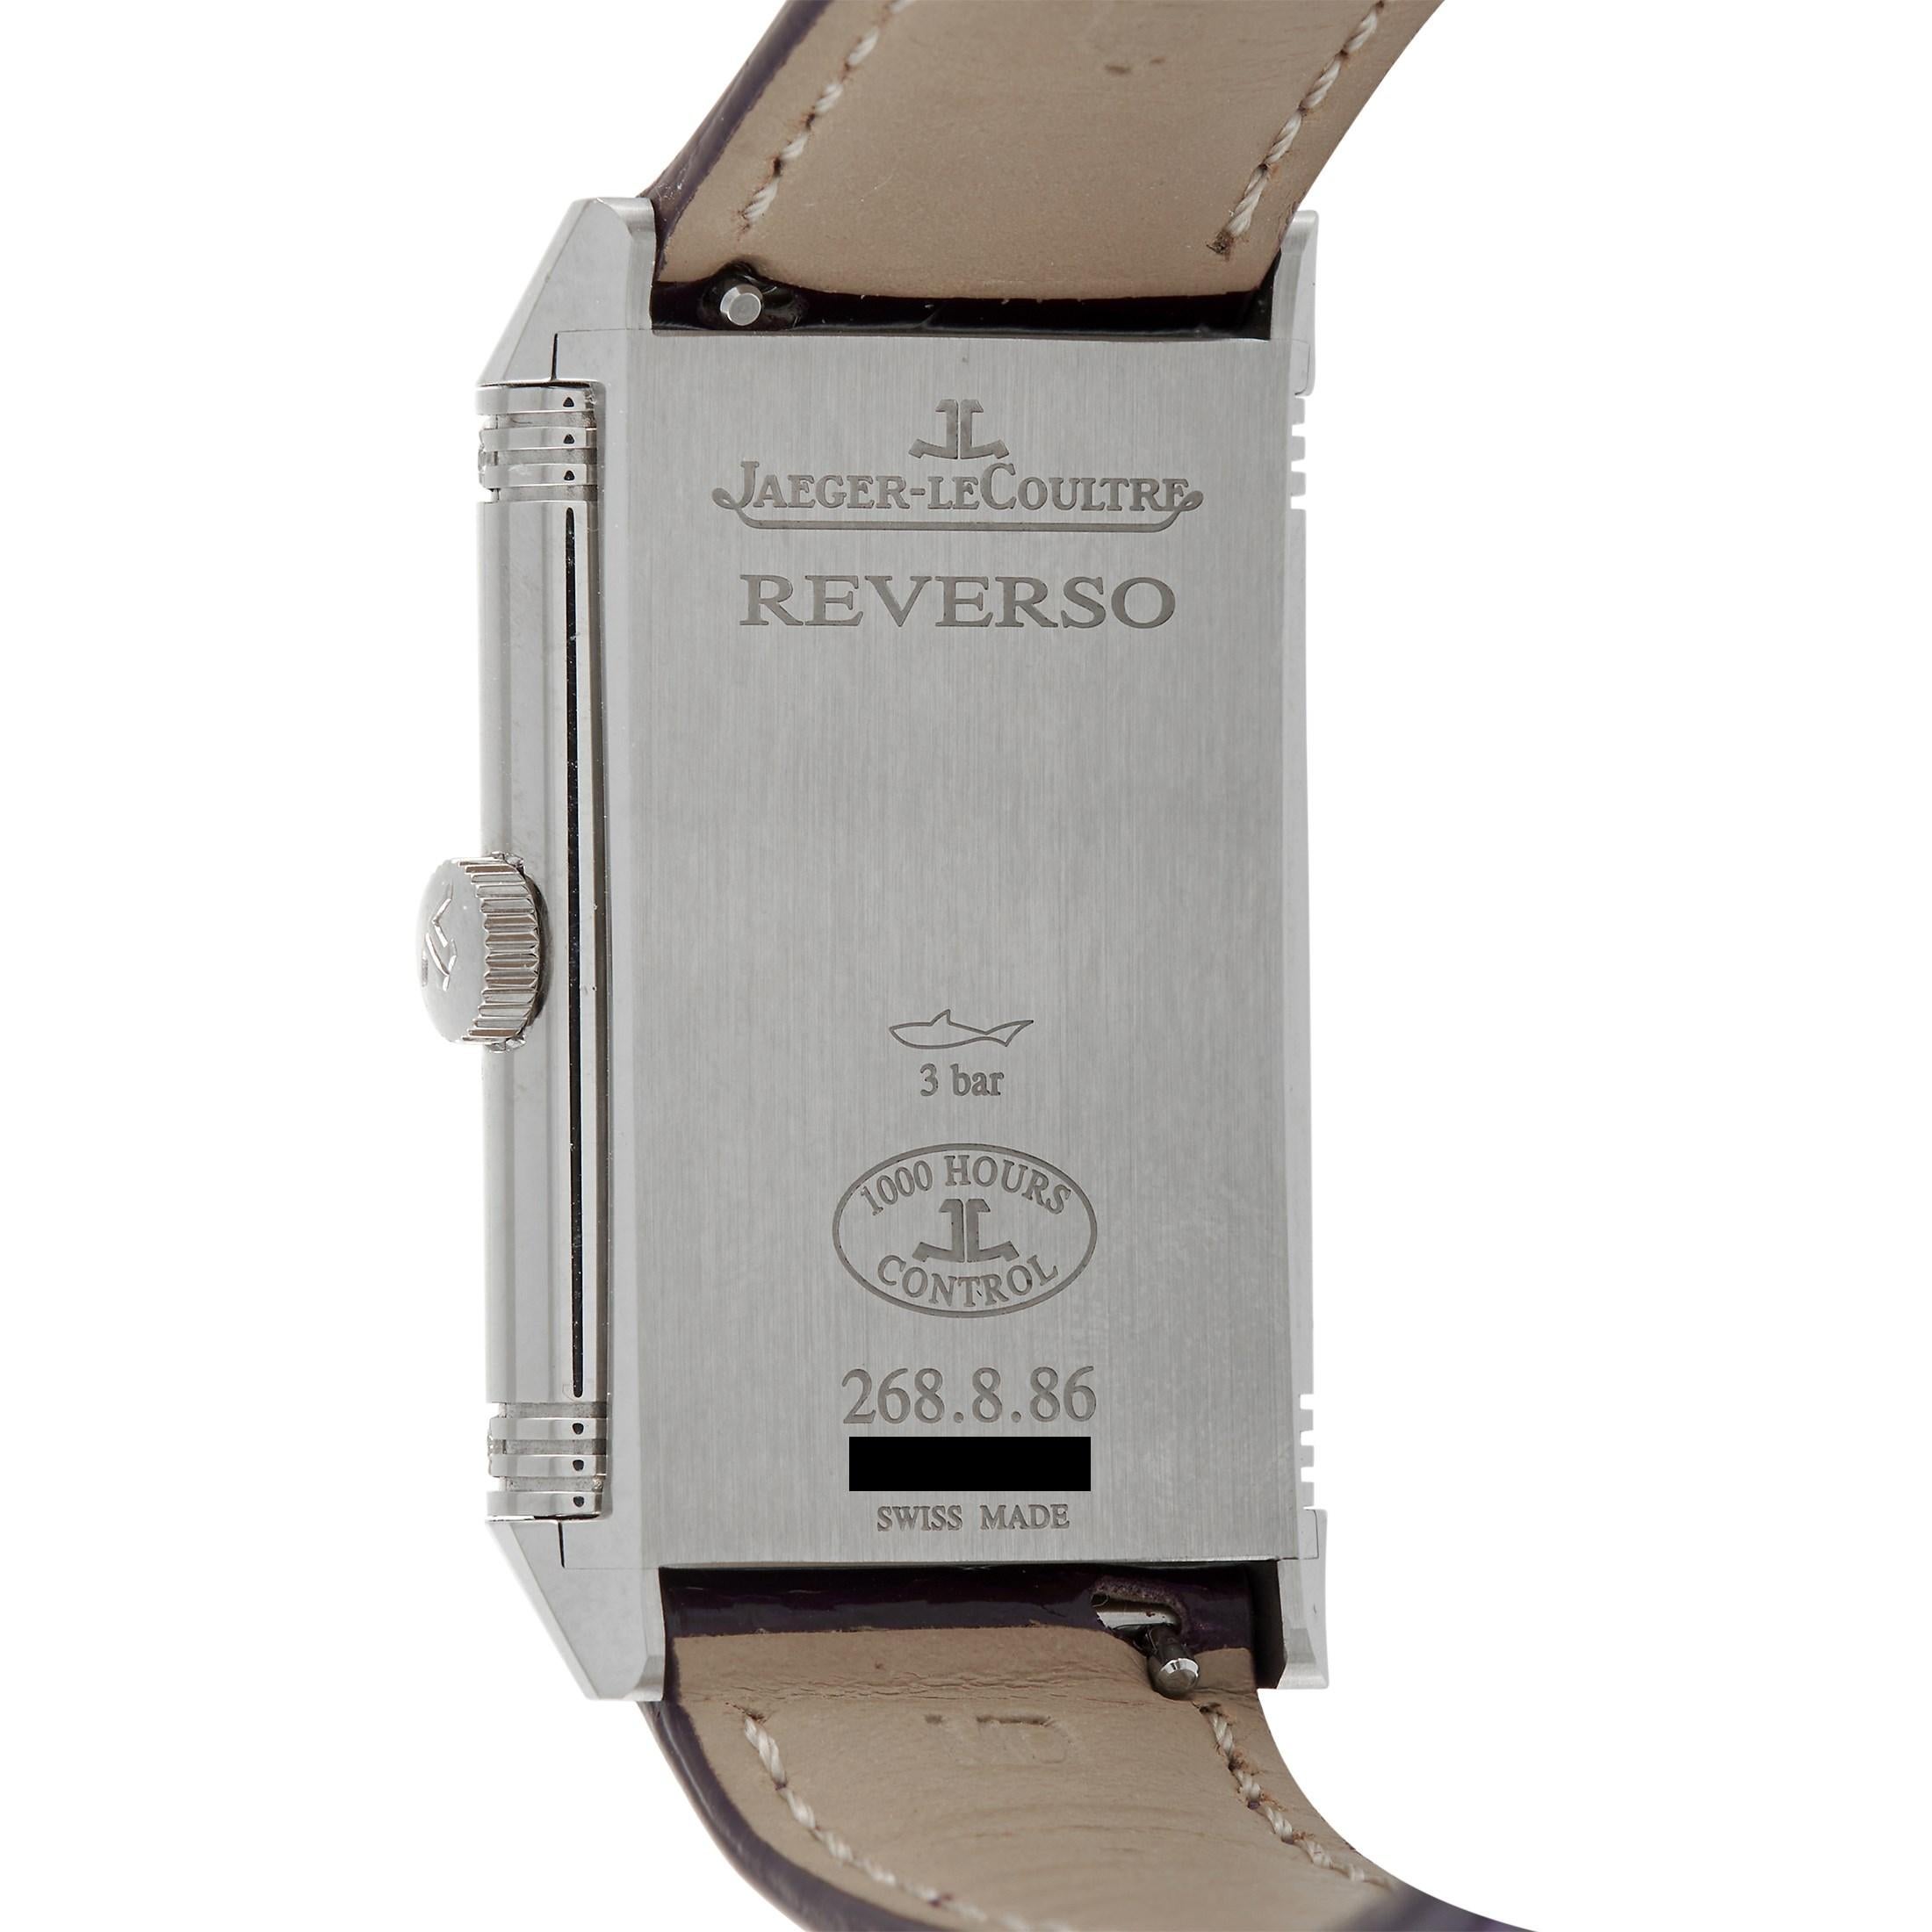 Round Cut Jaeger-LeCoultre Reverso Ultra Thin Diamond Watch 268.8.86